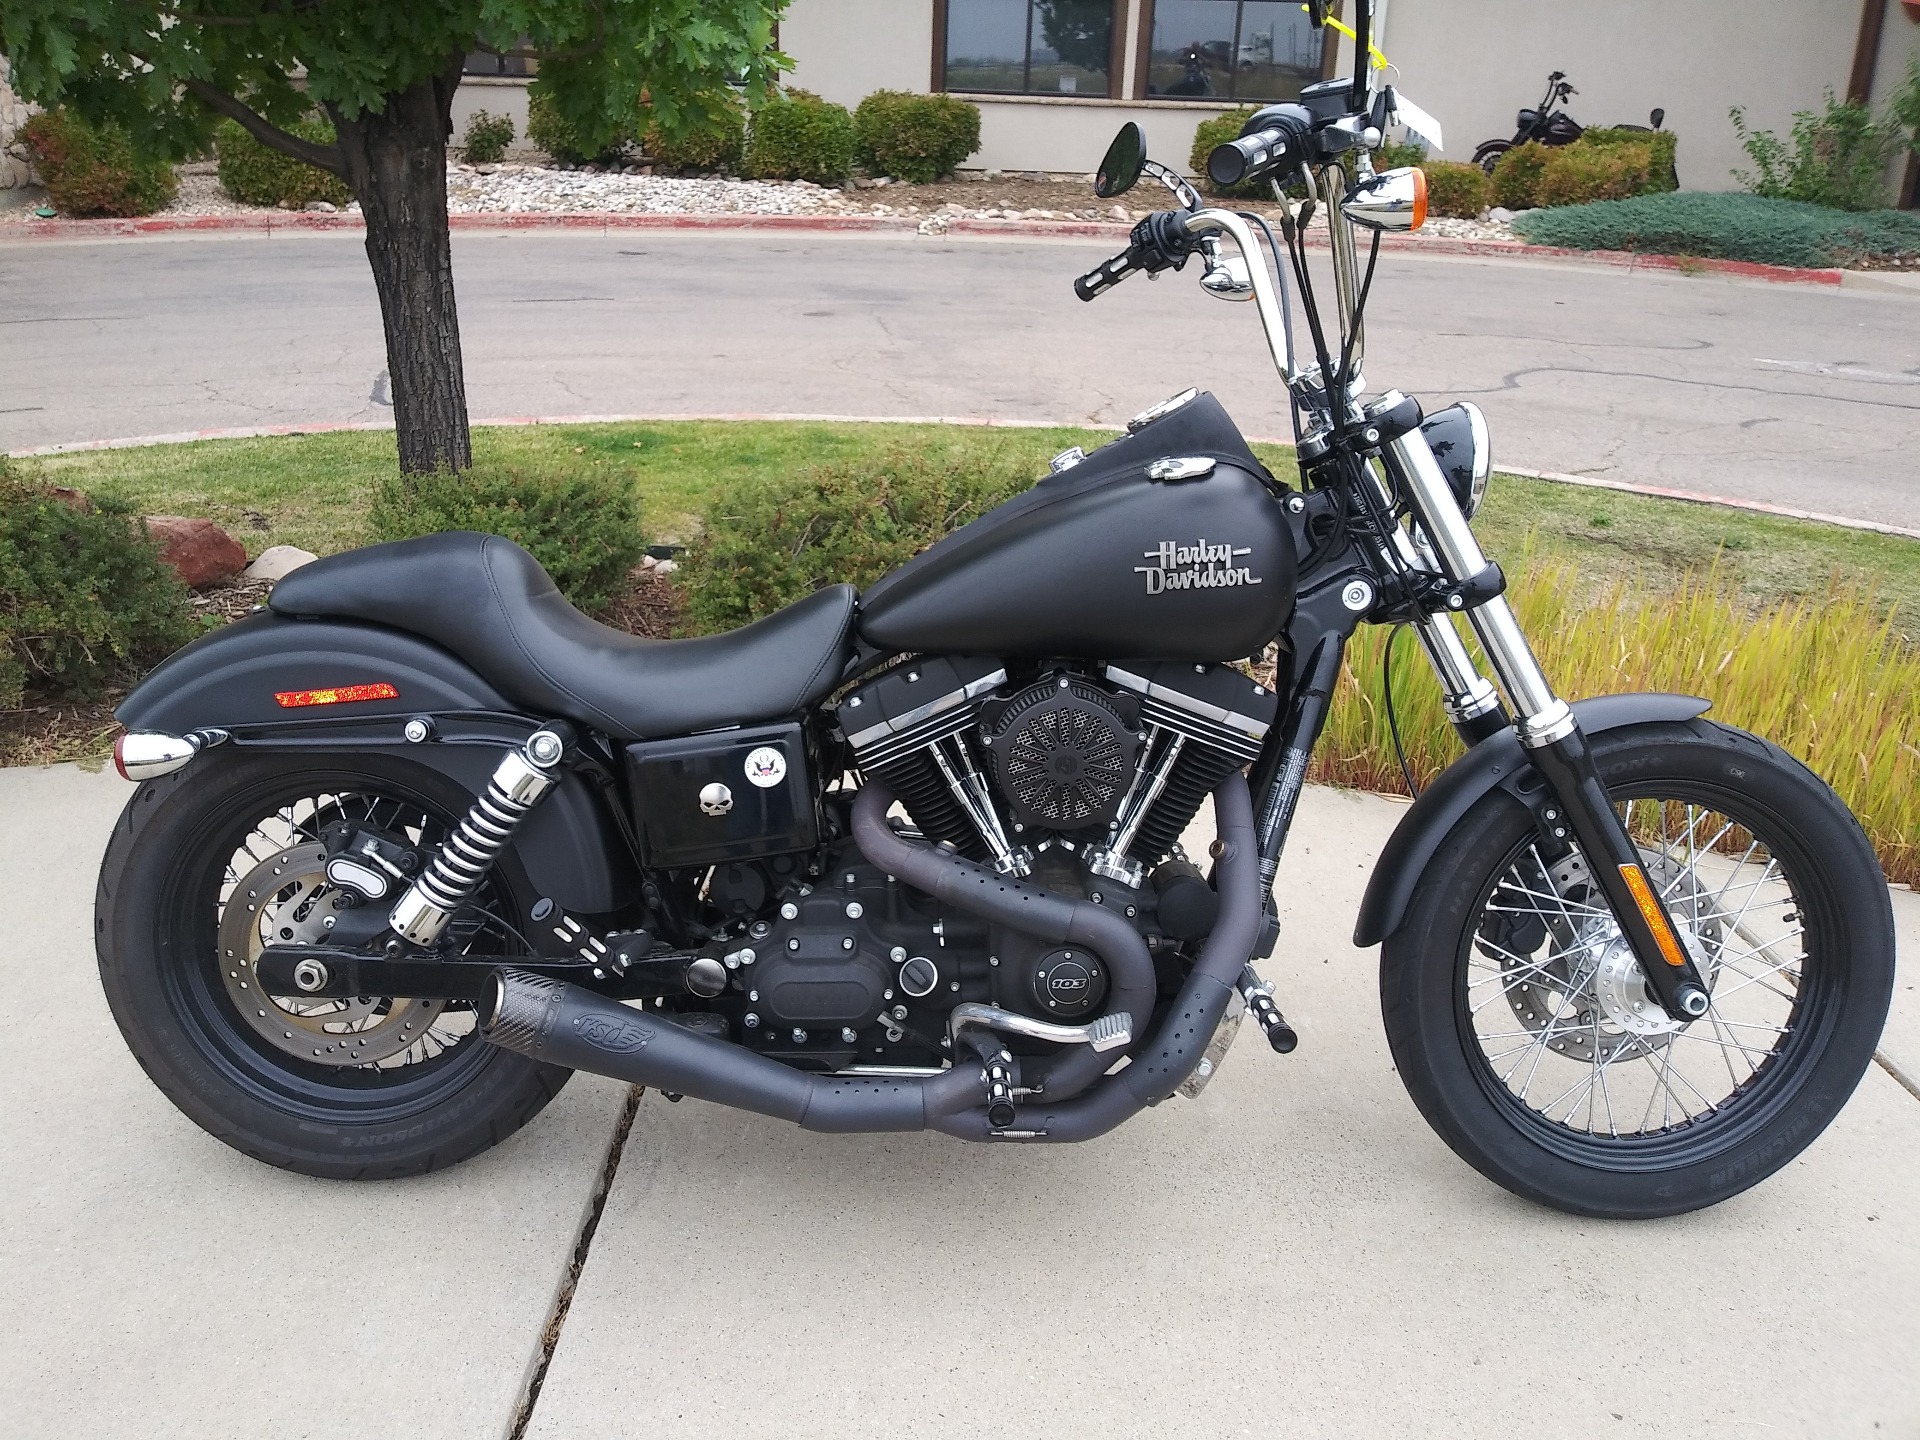 2014 Harley-Davidson Dyna® Street Bob® in Loveland, Colorado - Photo 1